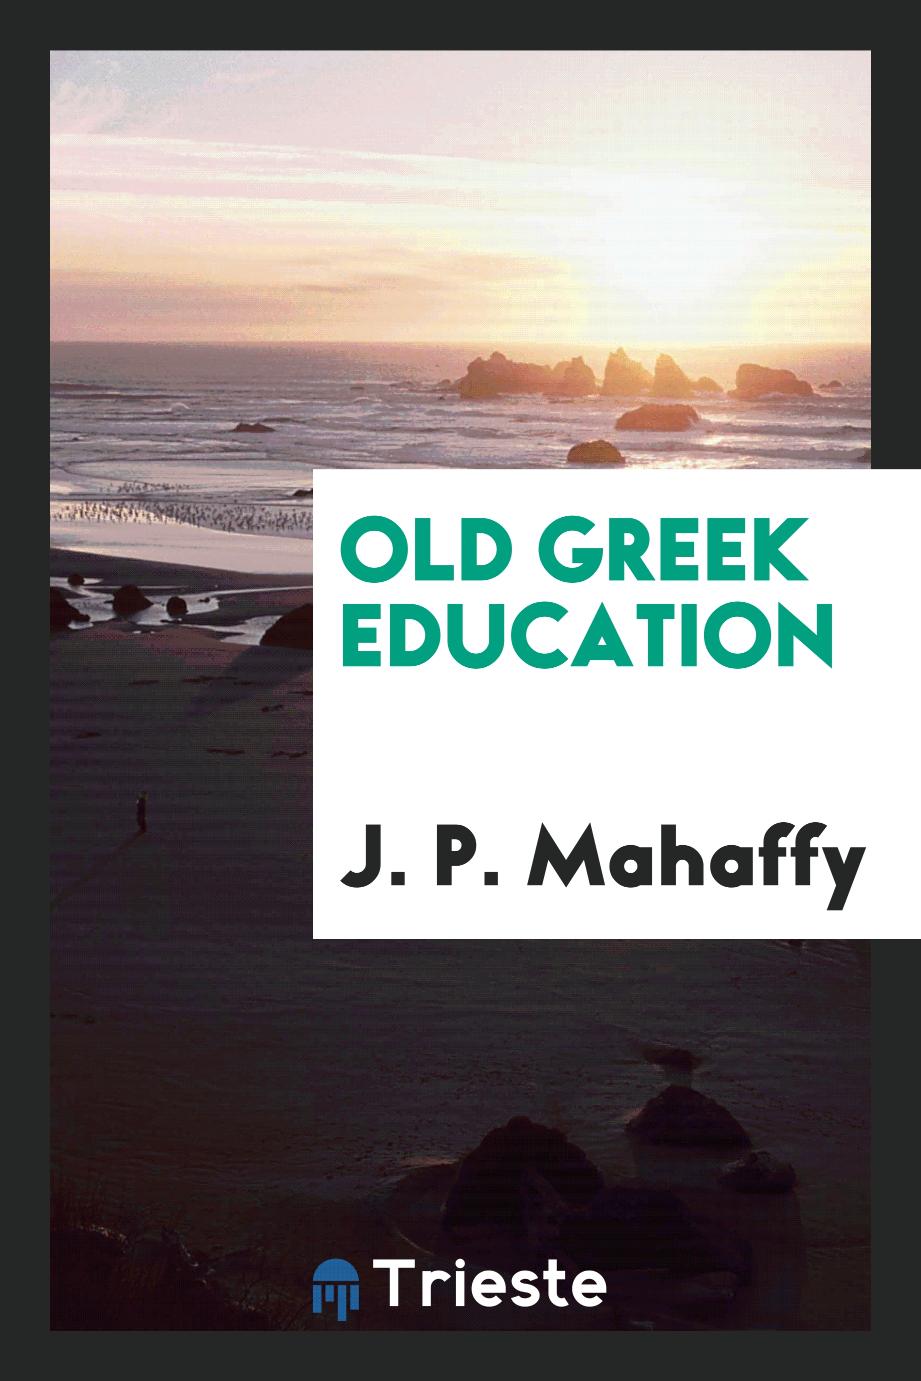 Old Greek education